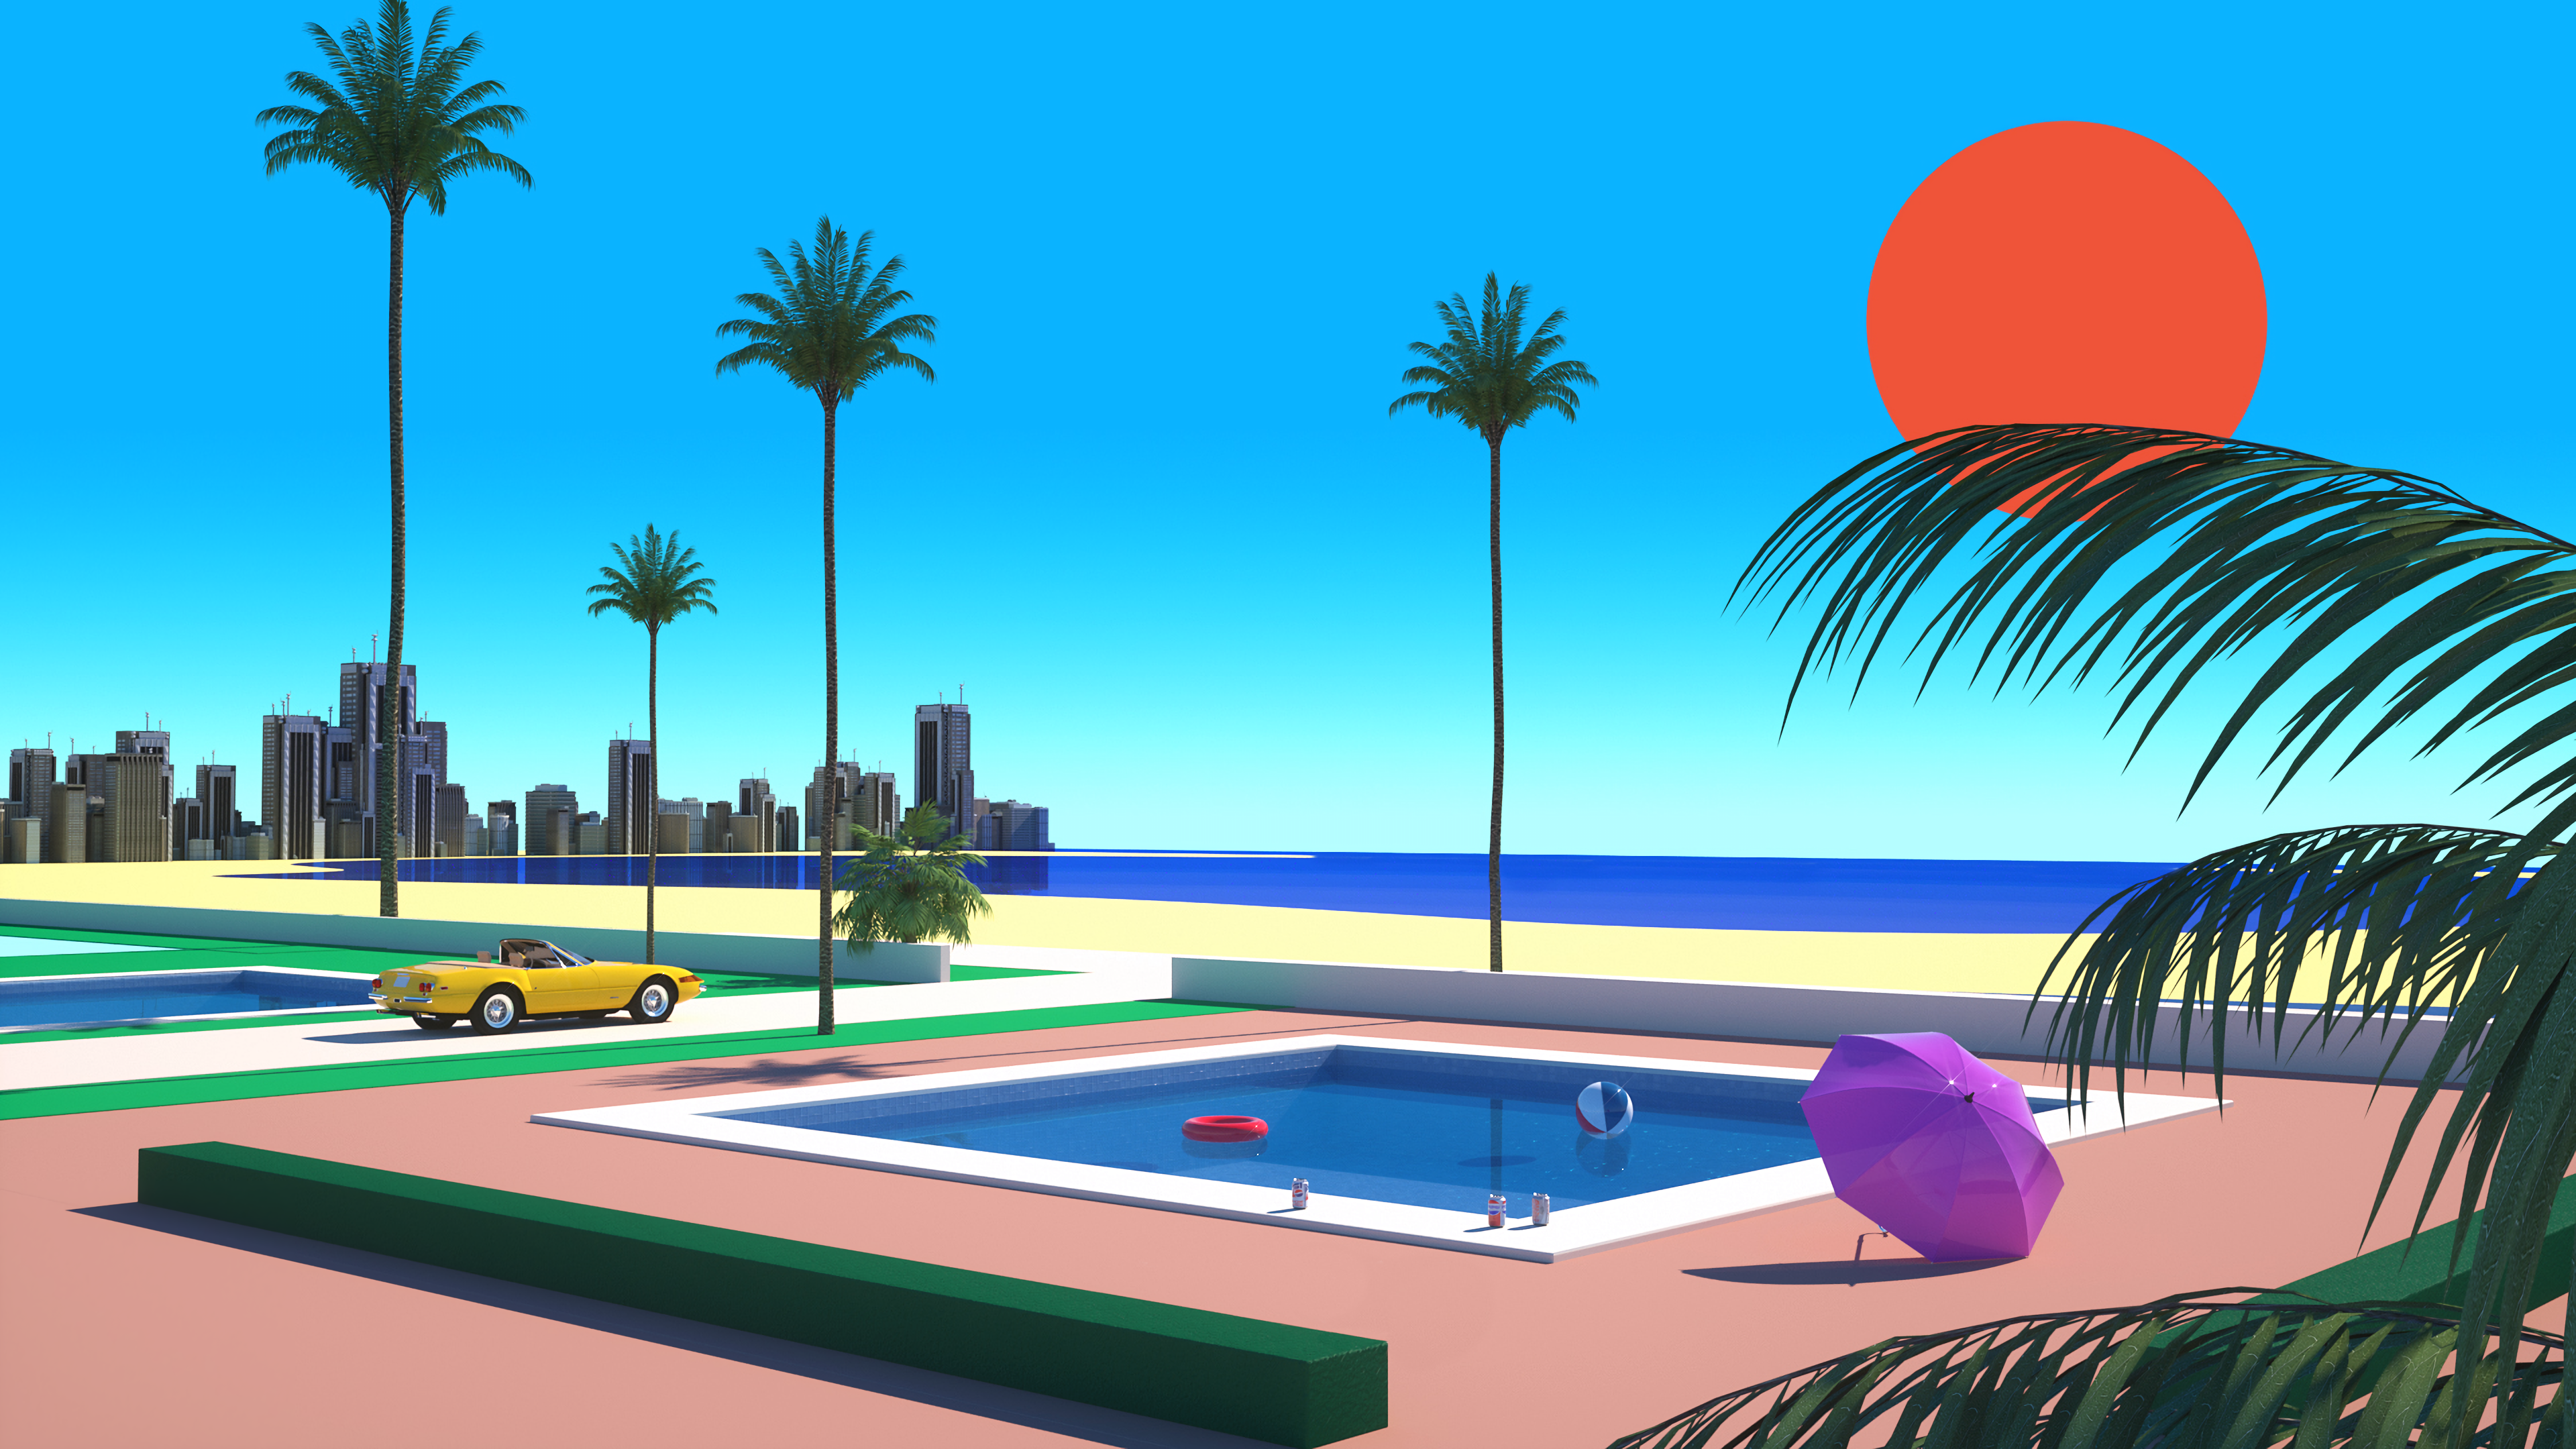 Wallpaper / Trey Trimble, red sun, palm trees, swimming pool, car, vaporwave, Ferrari free download